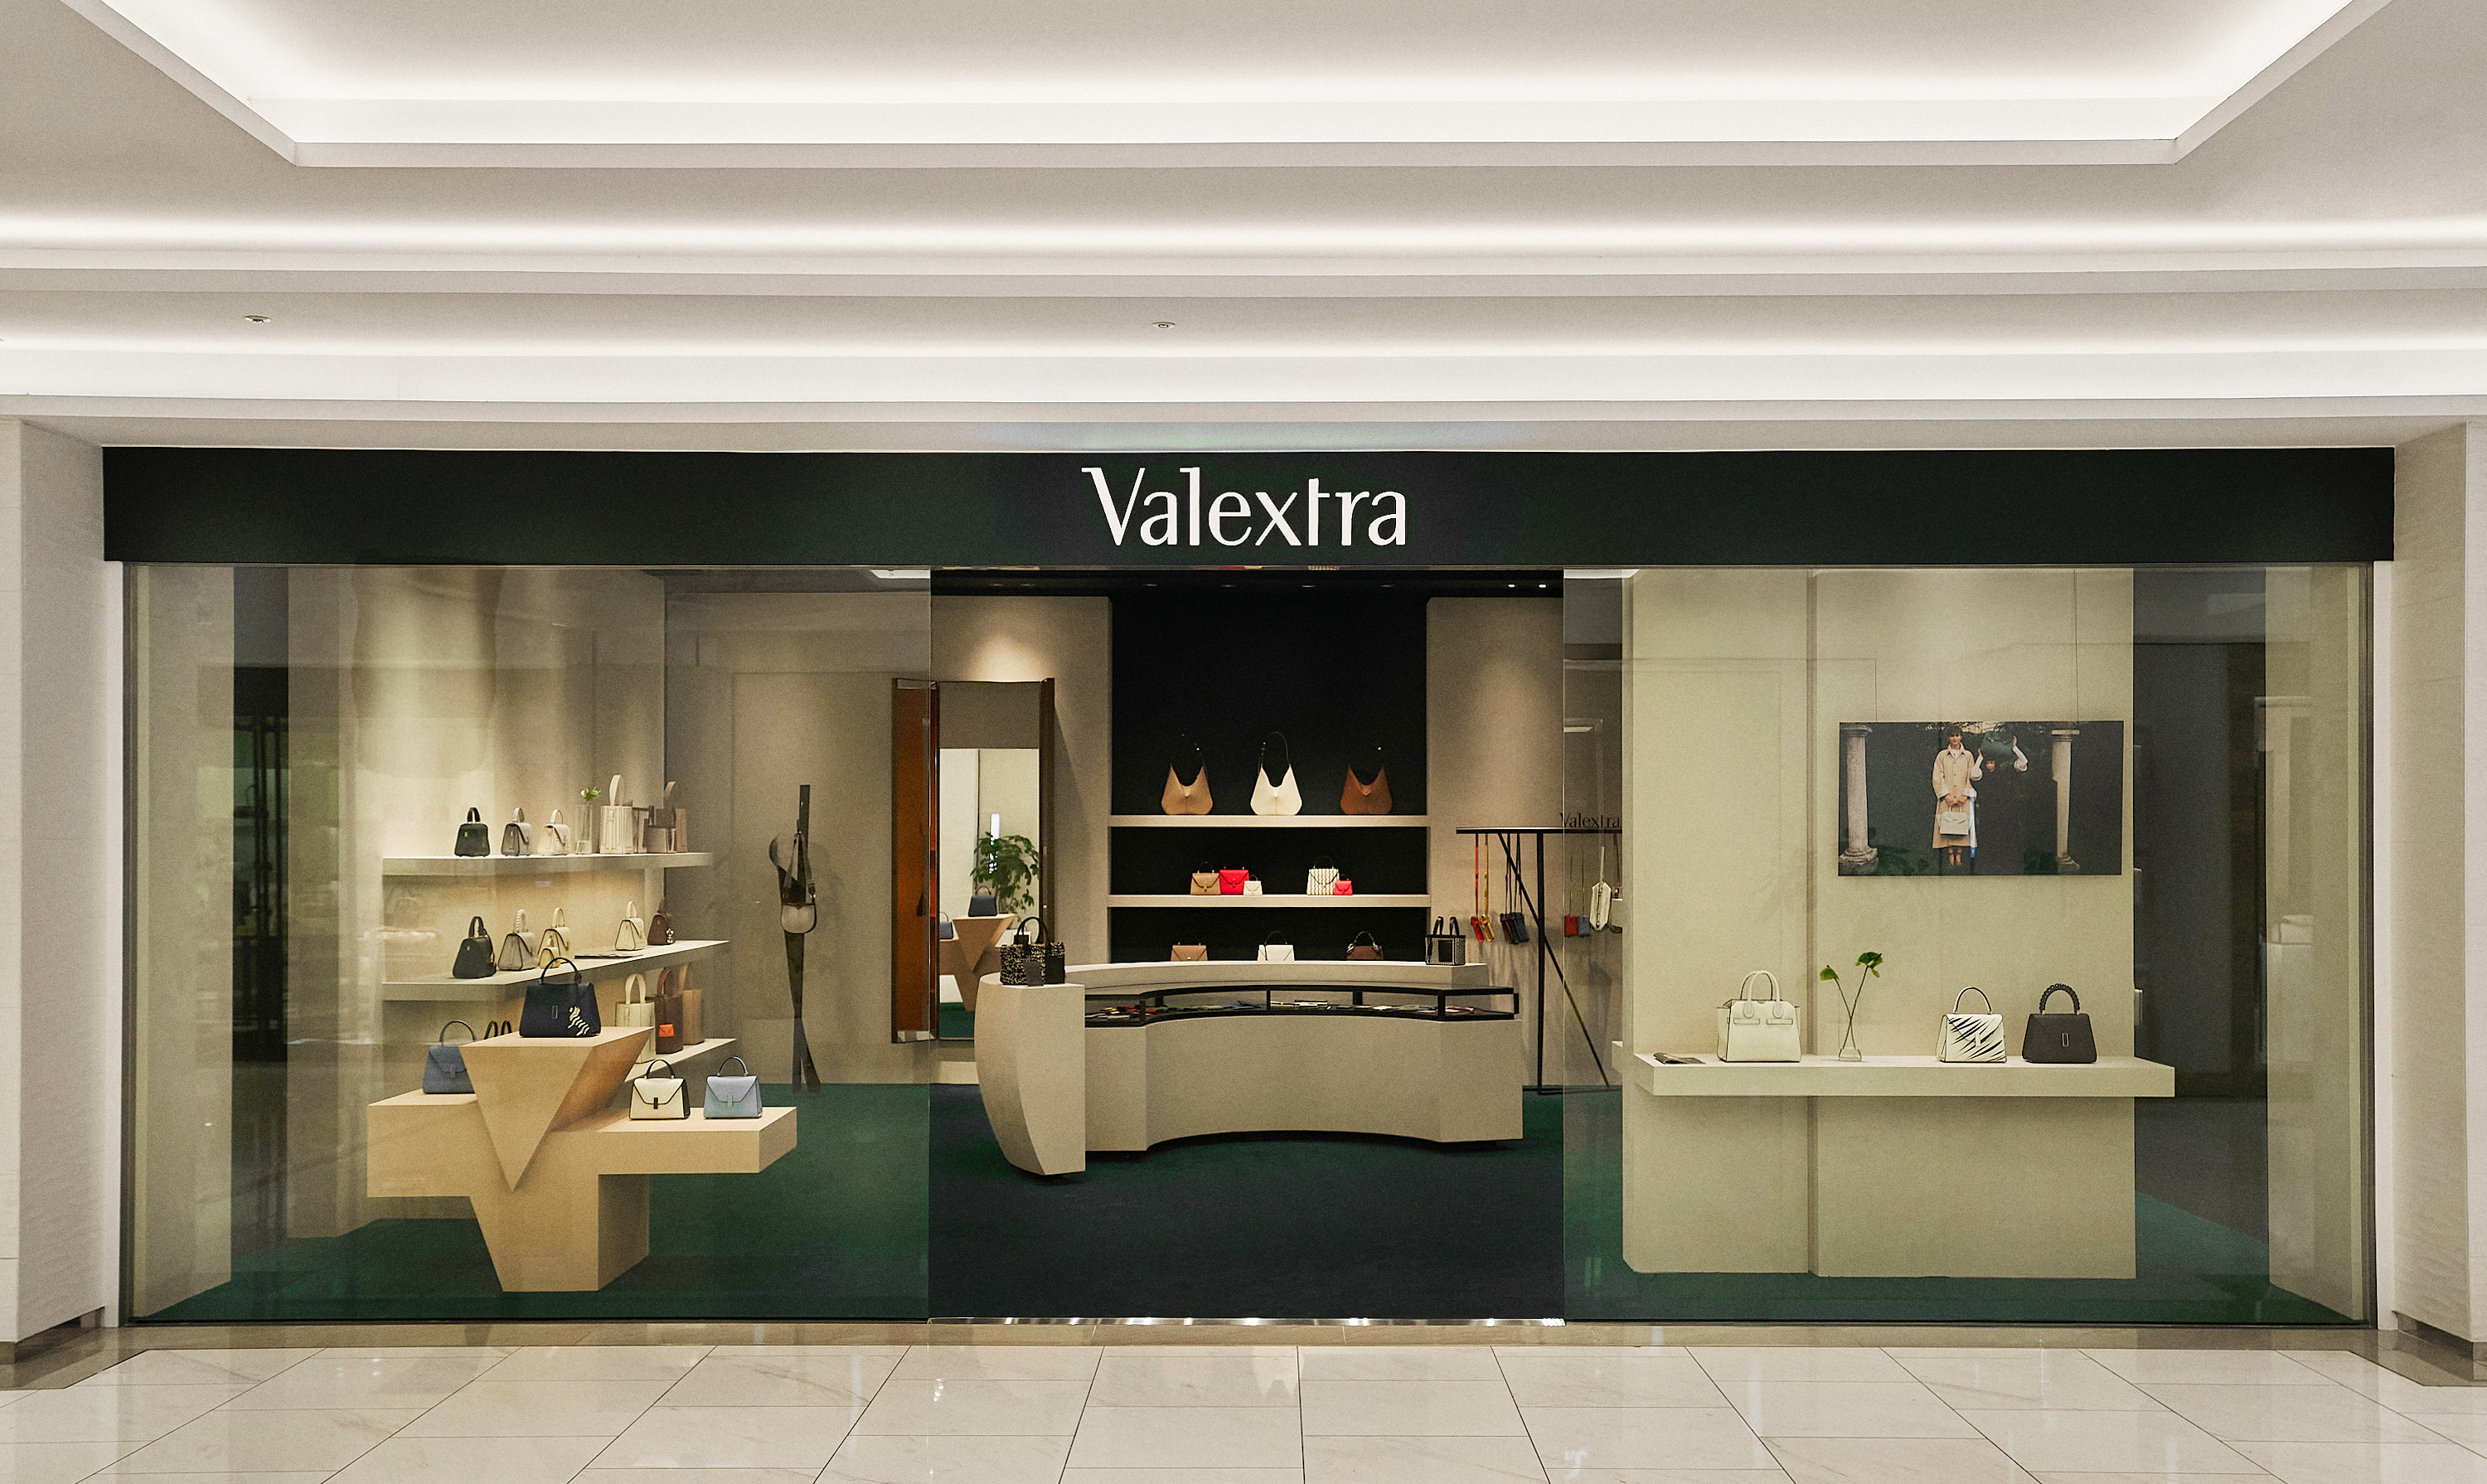 Valextra搬进了以精品为主的敦南SOGO百货，透过简约店装与新季度包款，继续传递低调风格美学。图／Valextra提供